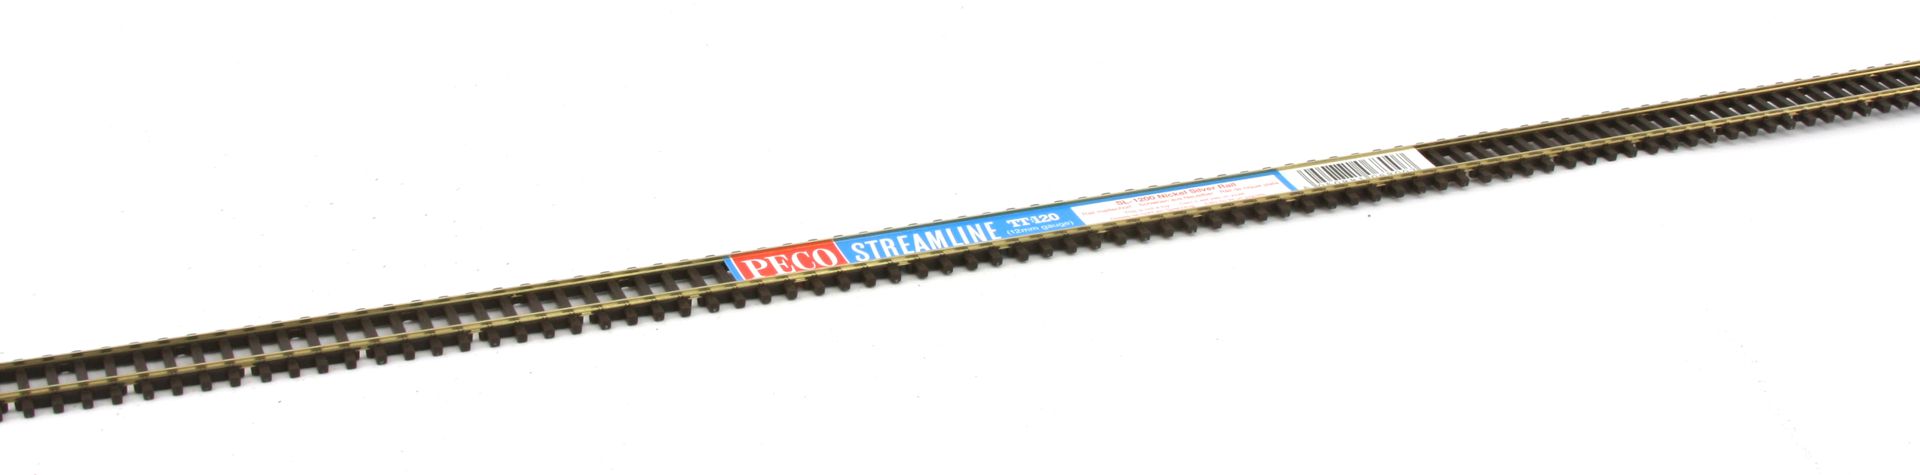 Peco SL-1200 - Flexgleis Code 55, 914 mm